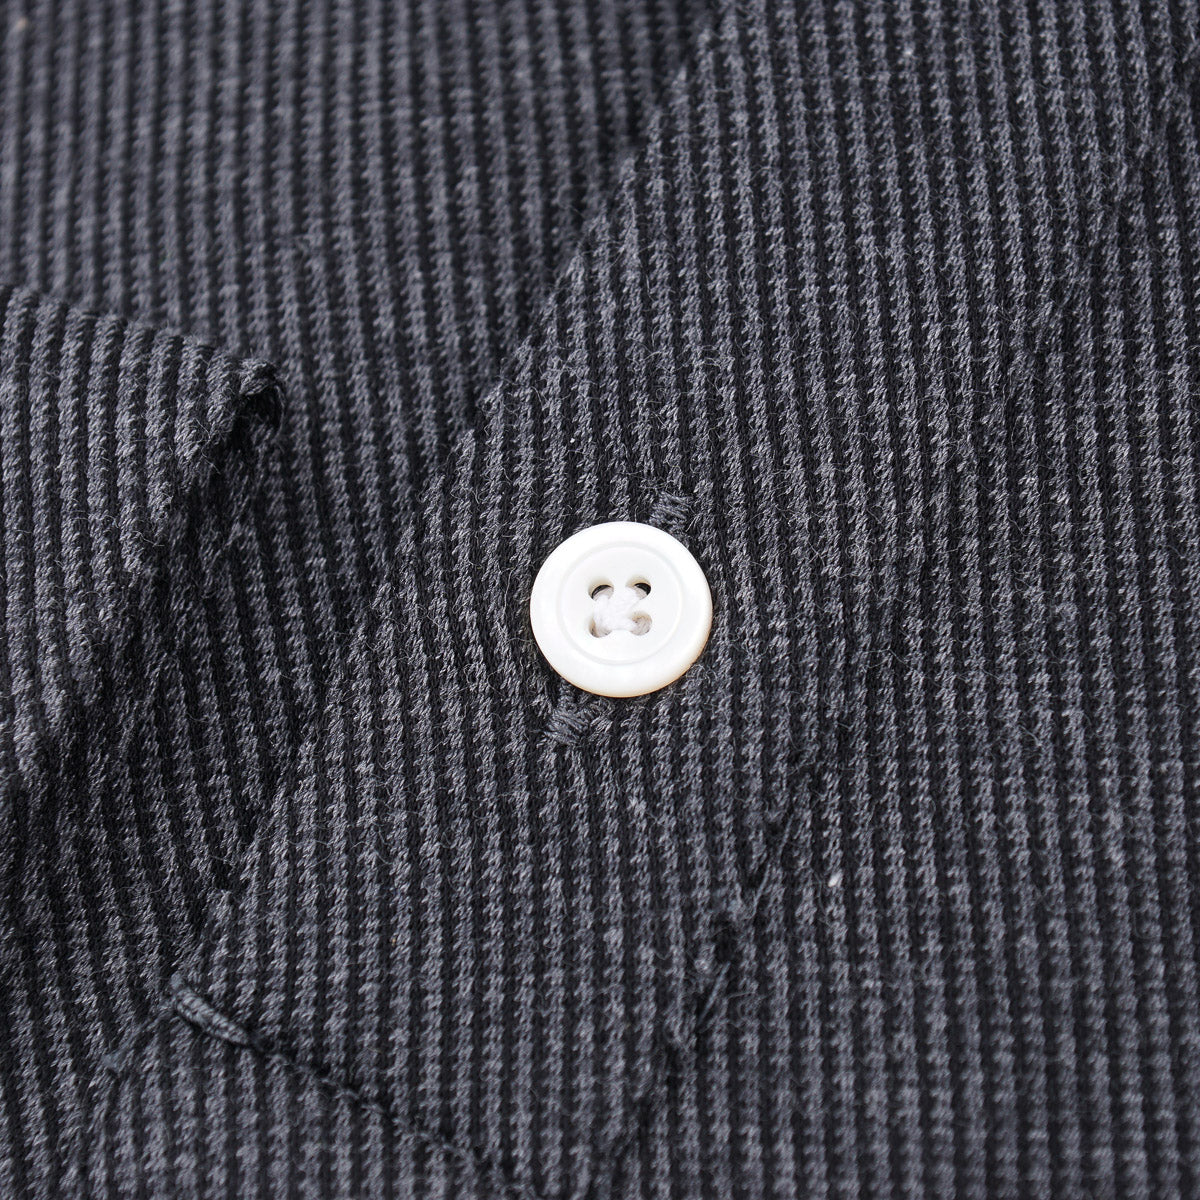 Finamore Long Sleeve Jersey Polo Shirt - Top Shelf Apparel